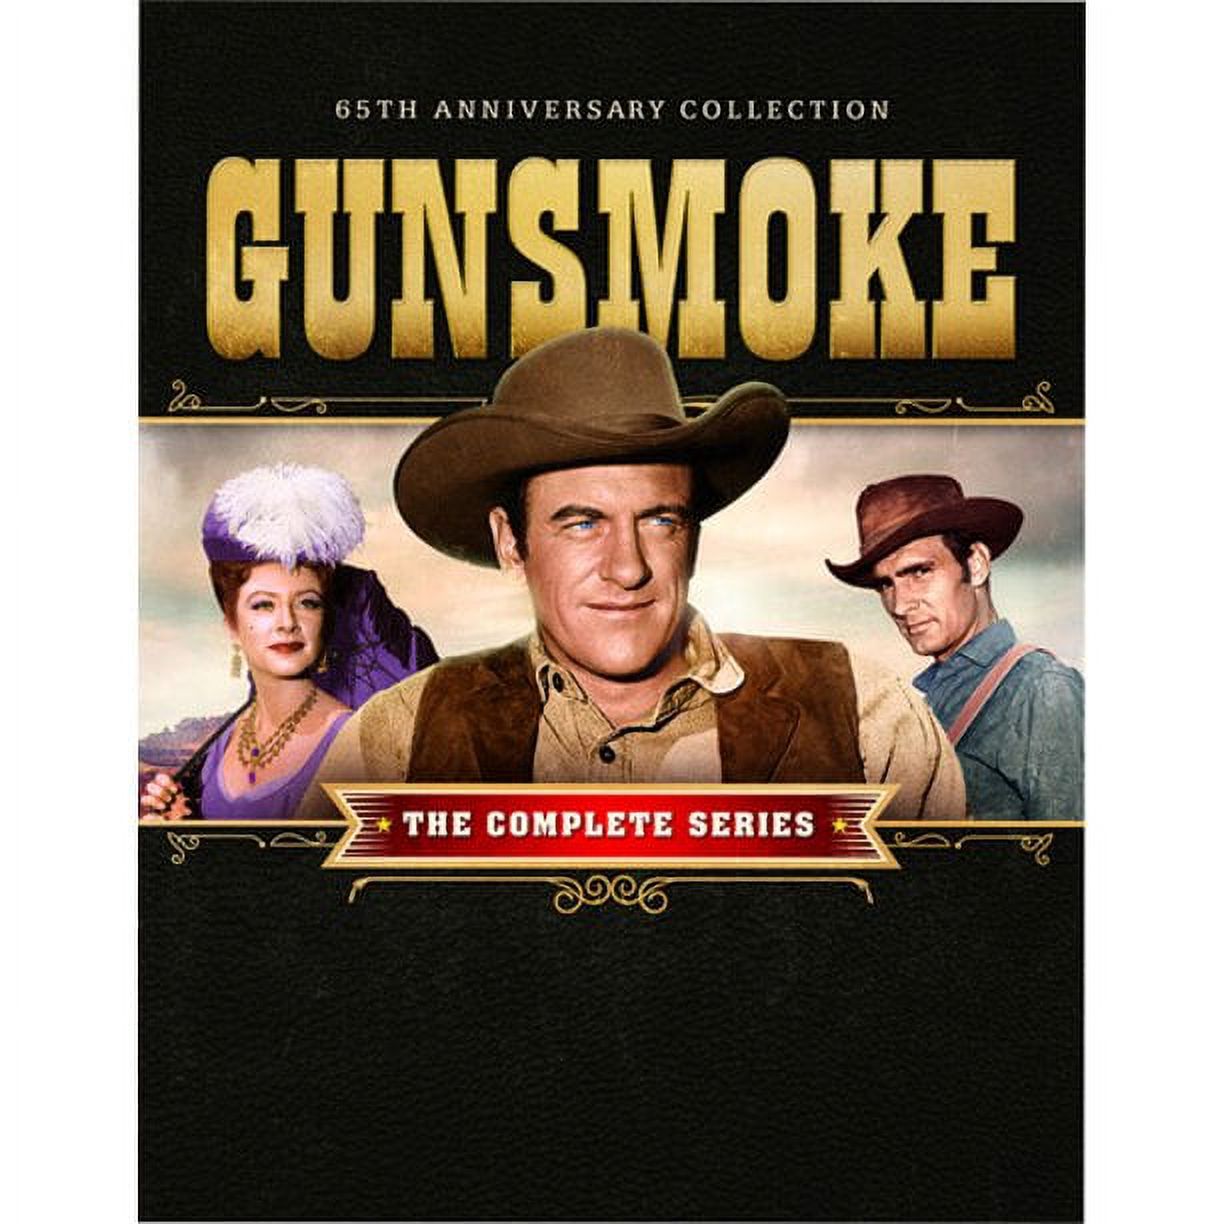 Gunsmoke Complete Series (DVD) - image 2 of 3